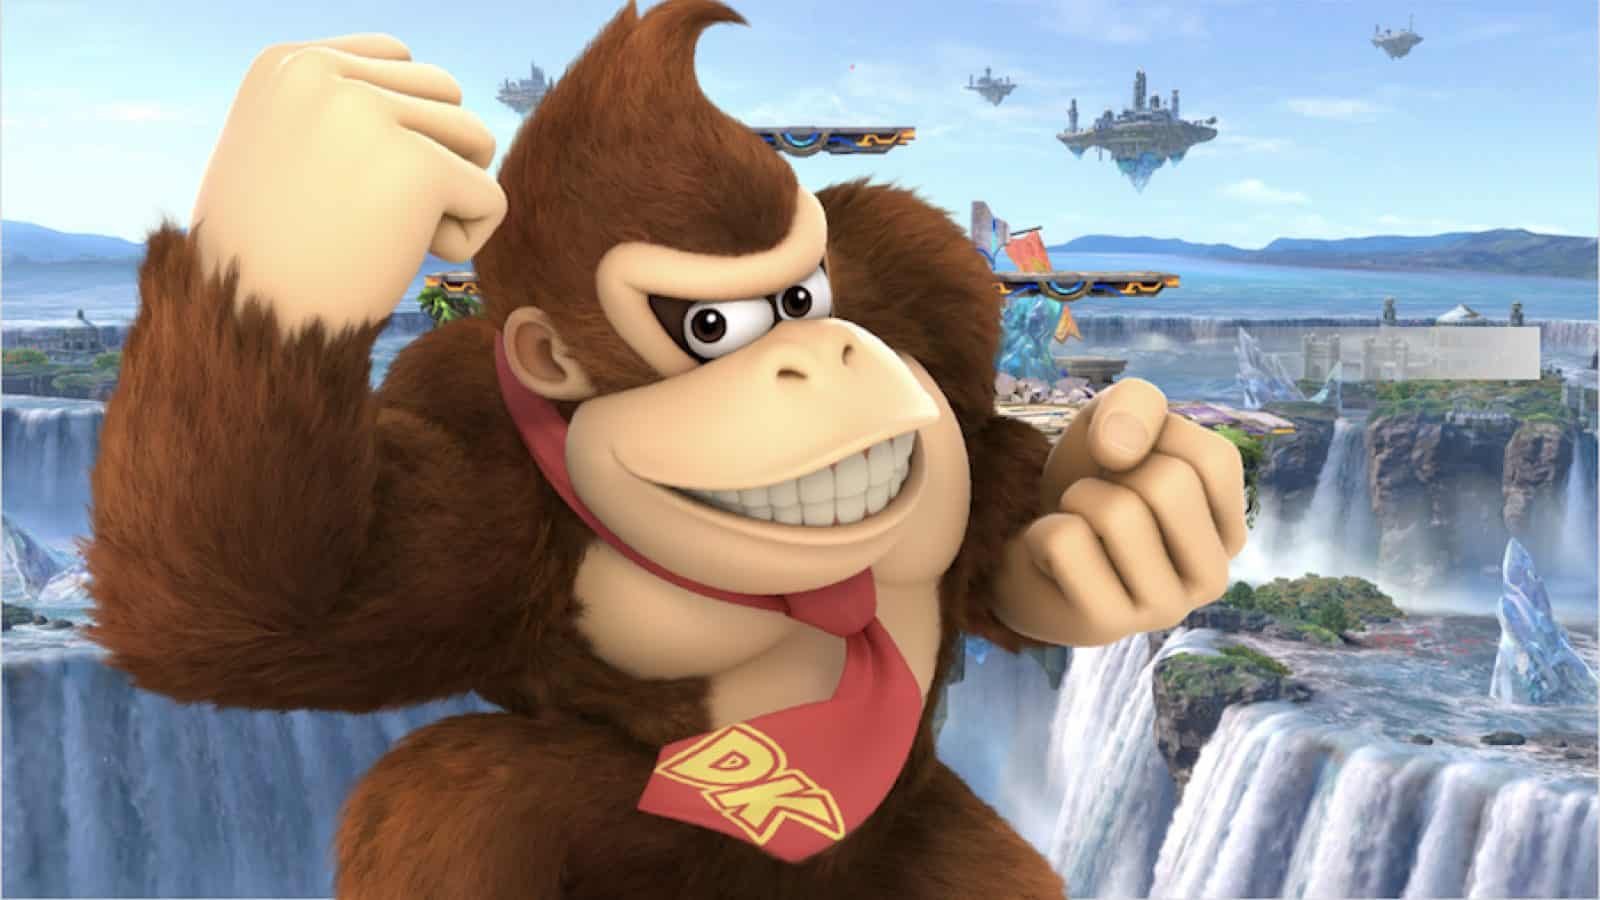 Super-Smash-Bros.-Ultimate-Donkey Kong DK